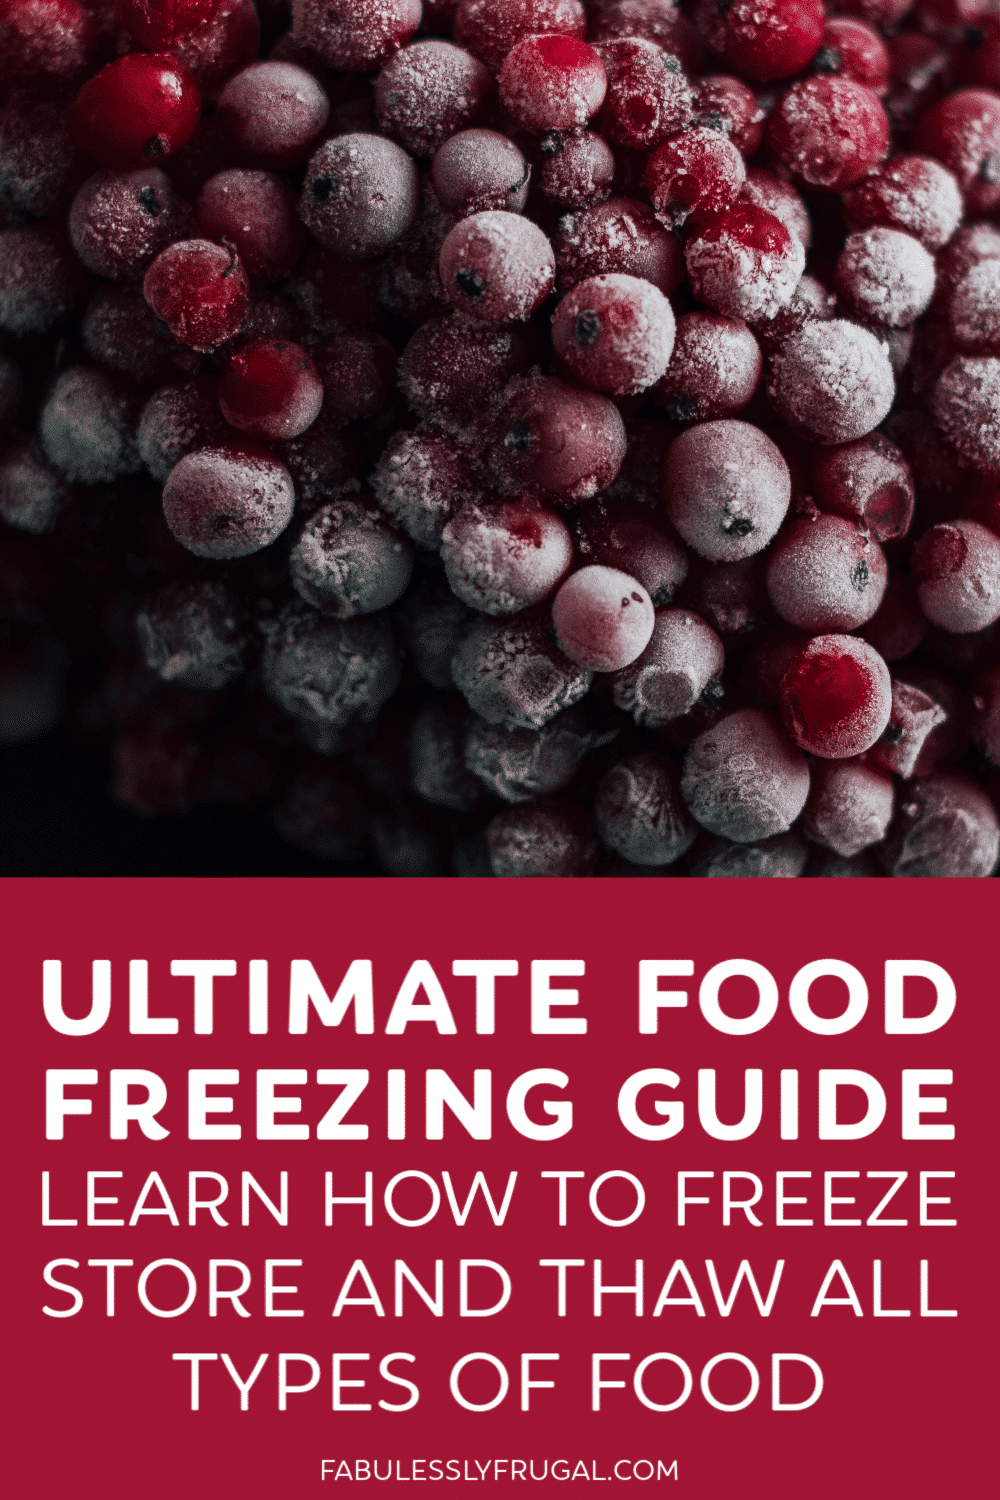 Food freezing guide